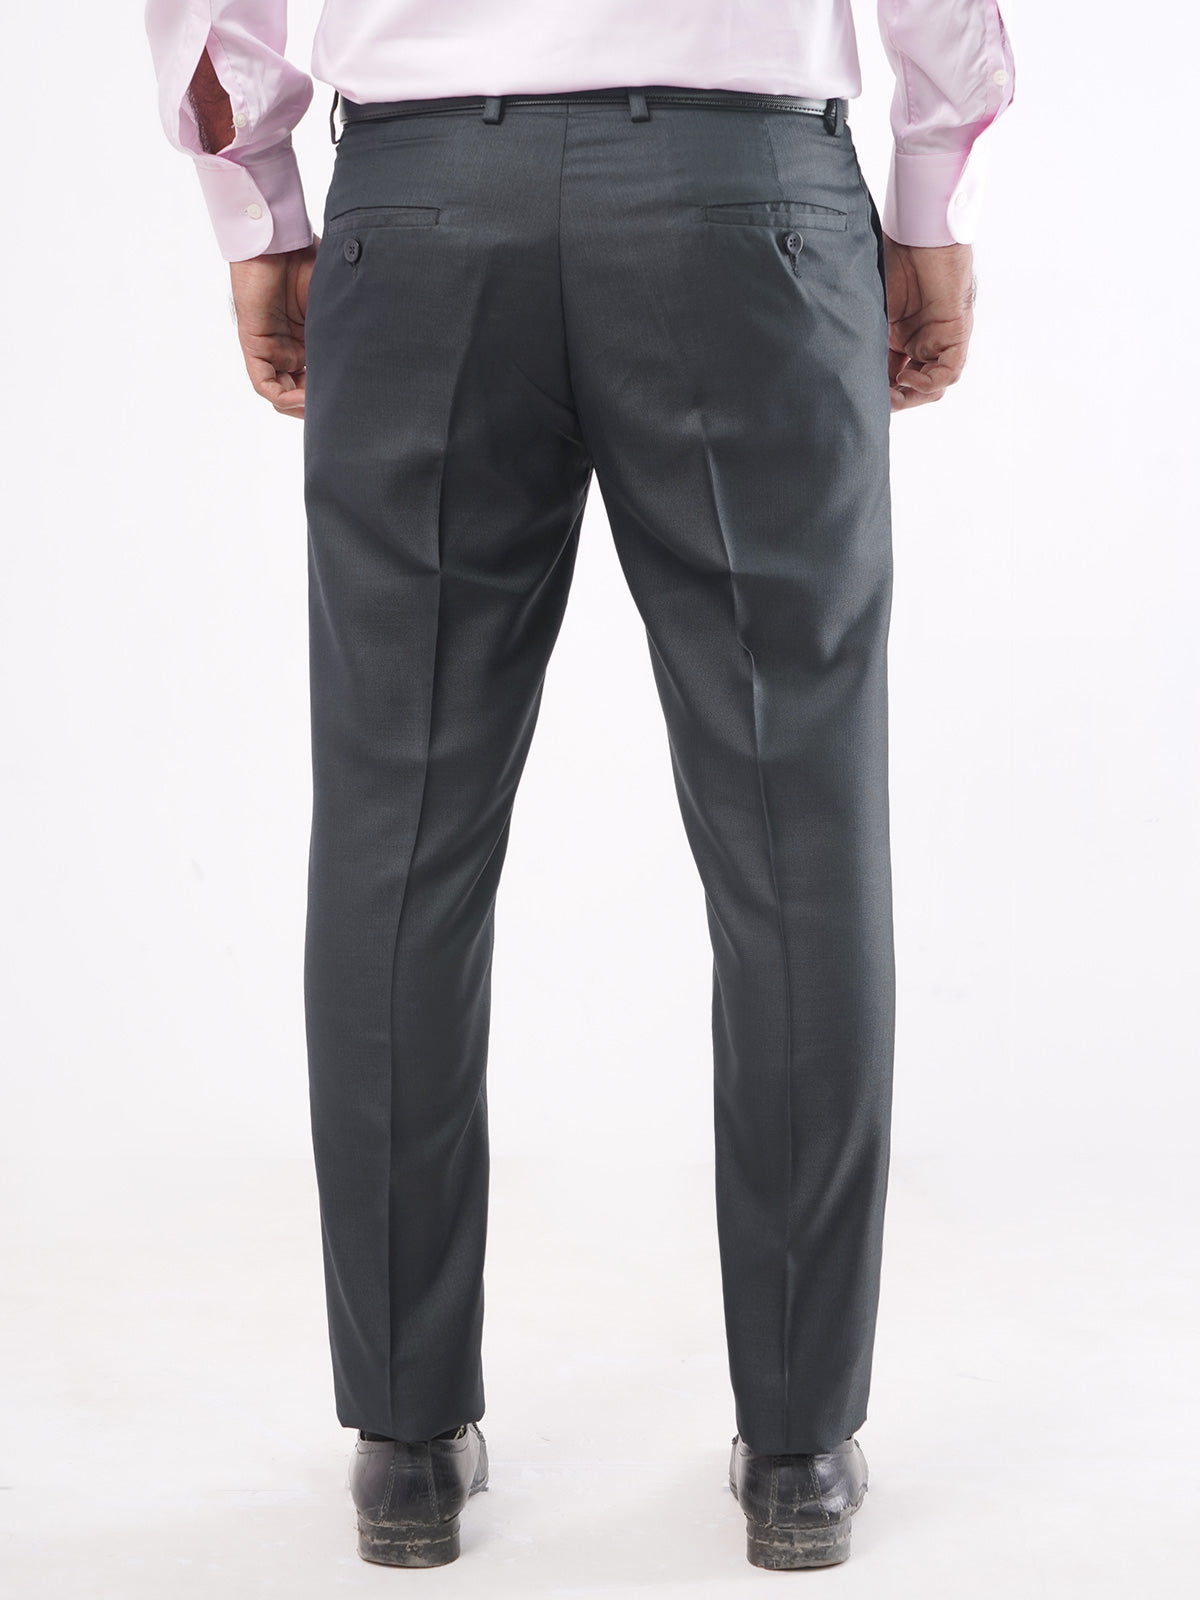 Men's pants chinos - grey P894 | Ombre.com - Men's clothing online